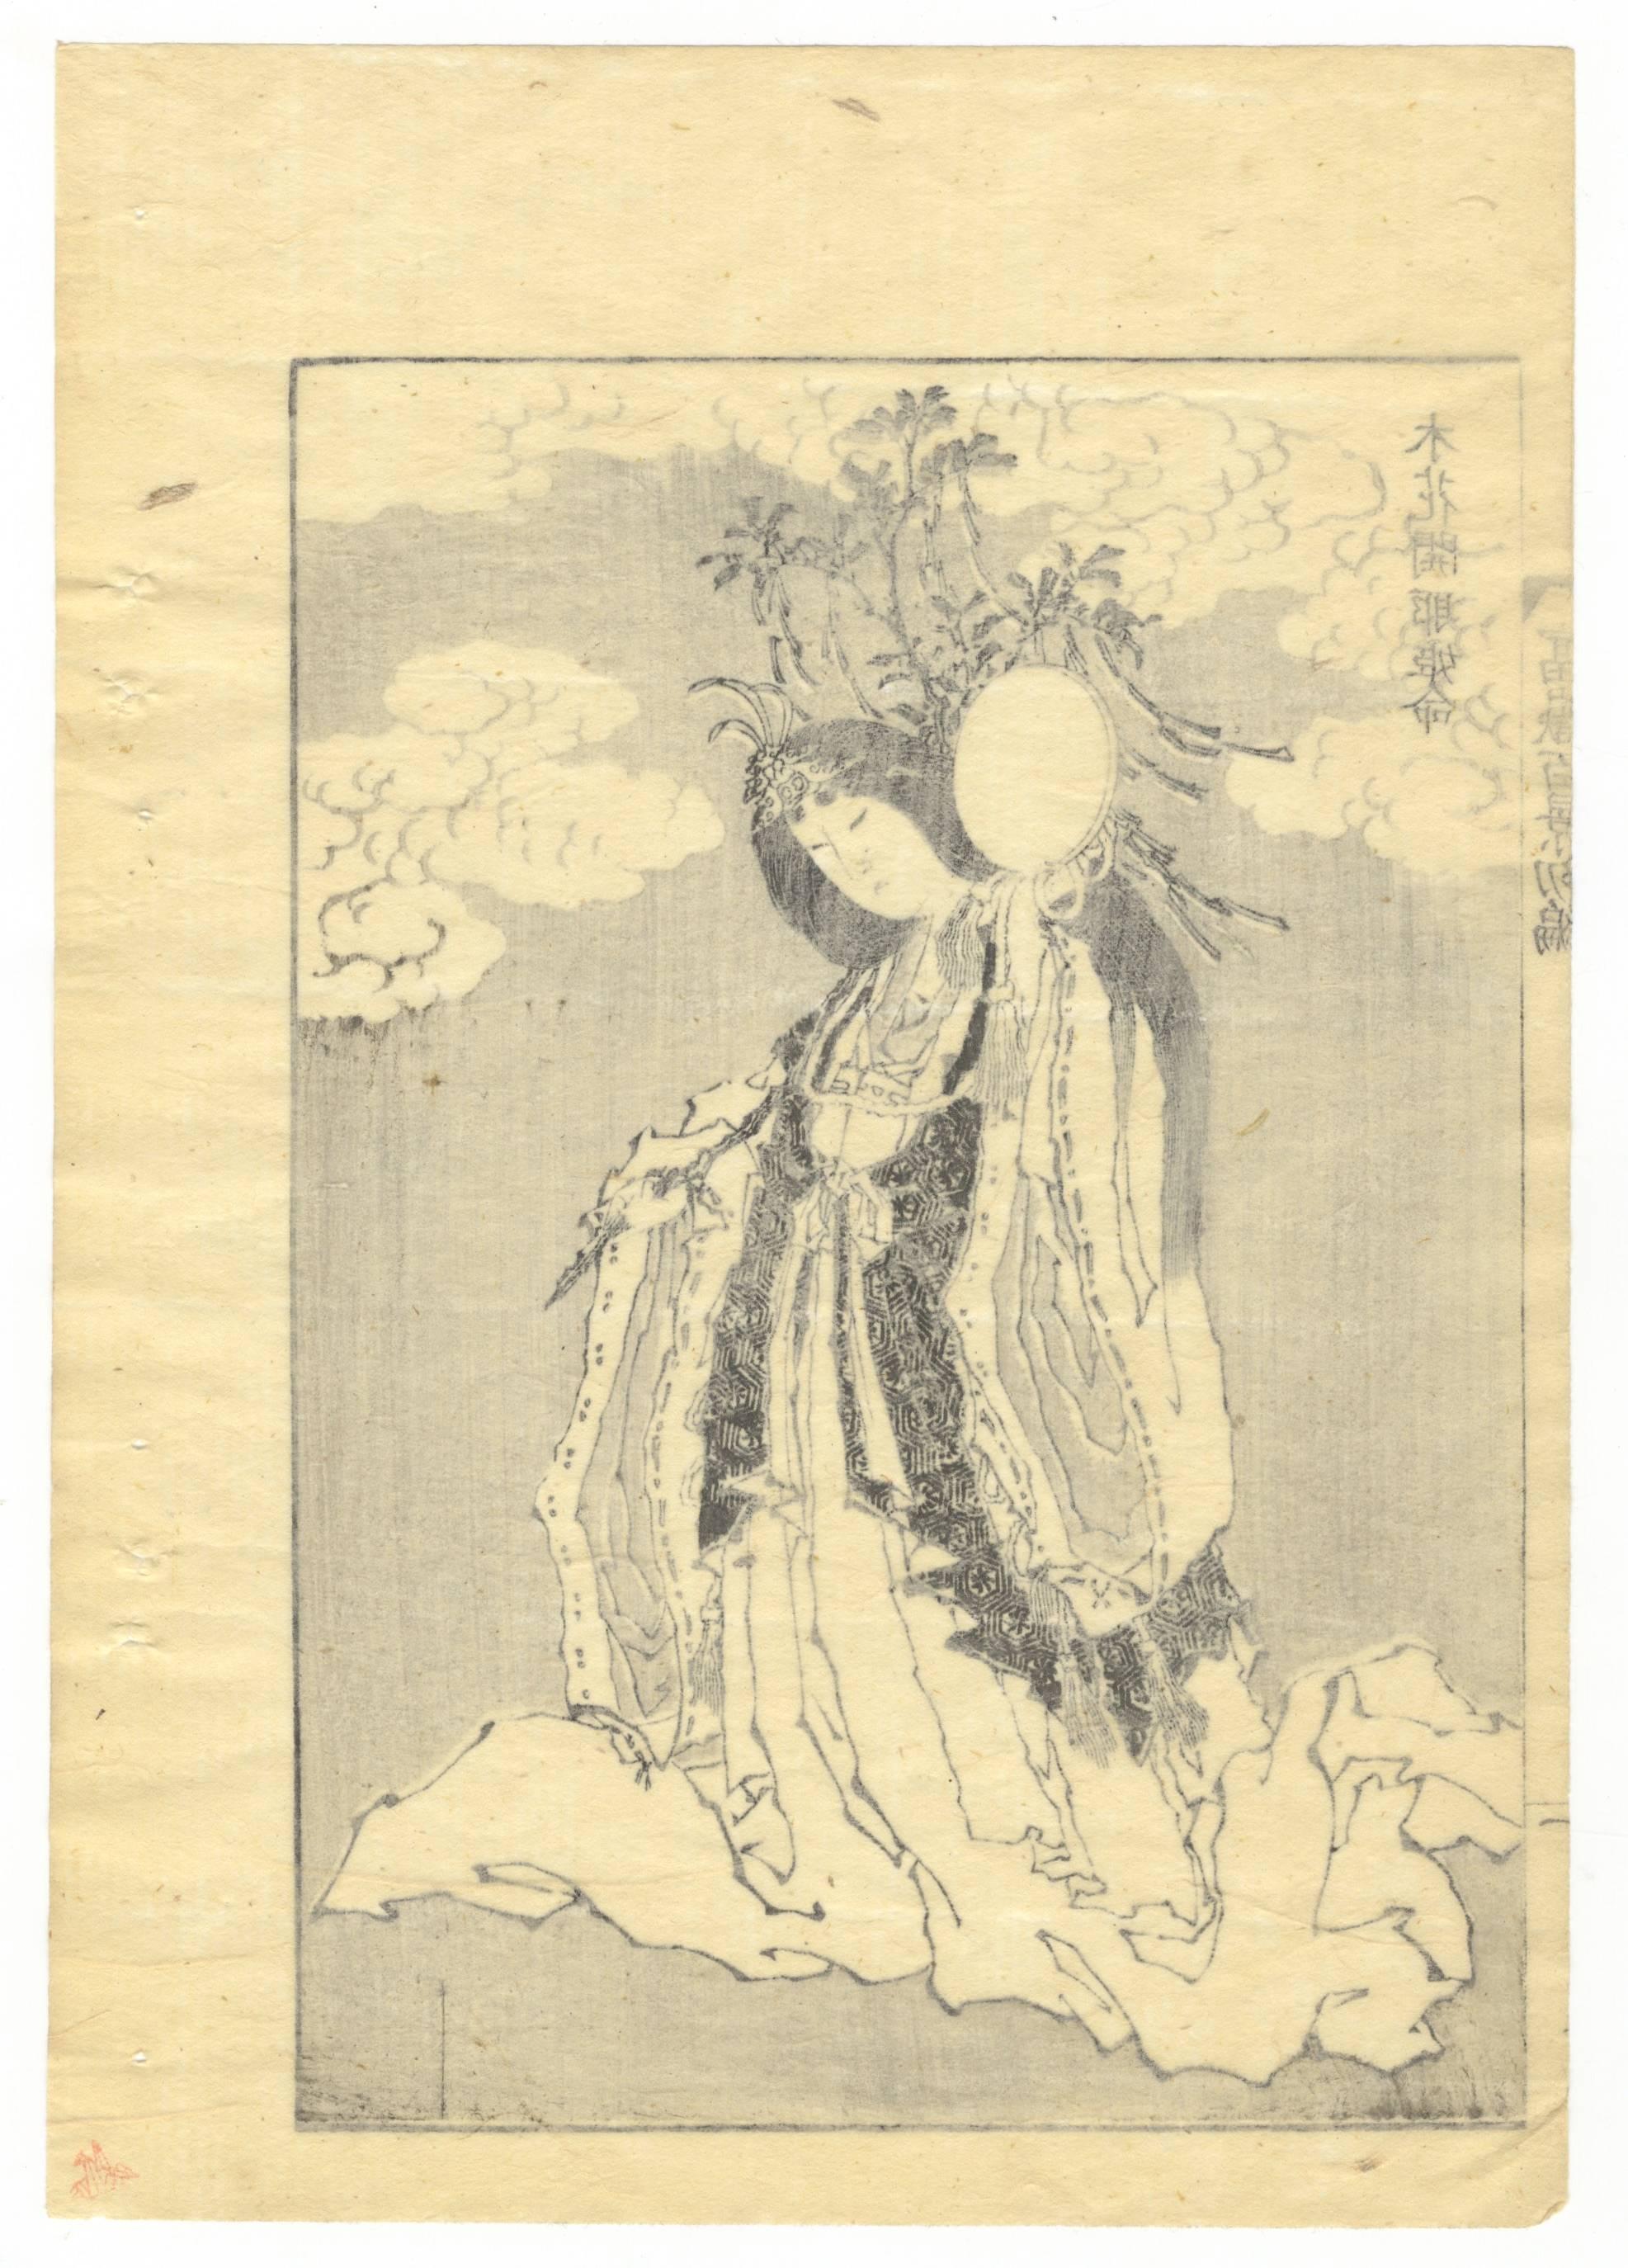 Hand-printed on traditional Japanese washi paper (mulberry tree paper).

Artist: Katsushika Hokusai
Title: Princess Konohanasakuya
Series: 100 Views of Mt Fuji, Volume 1
Publisher: Eirakuya Toshiro
Published: 1835-1880

This print is from the series